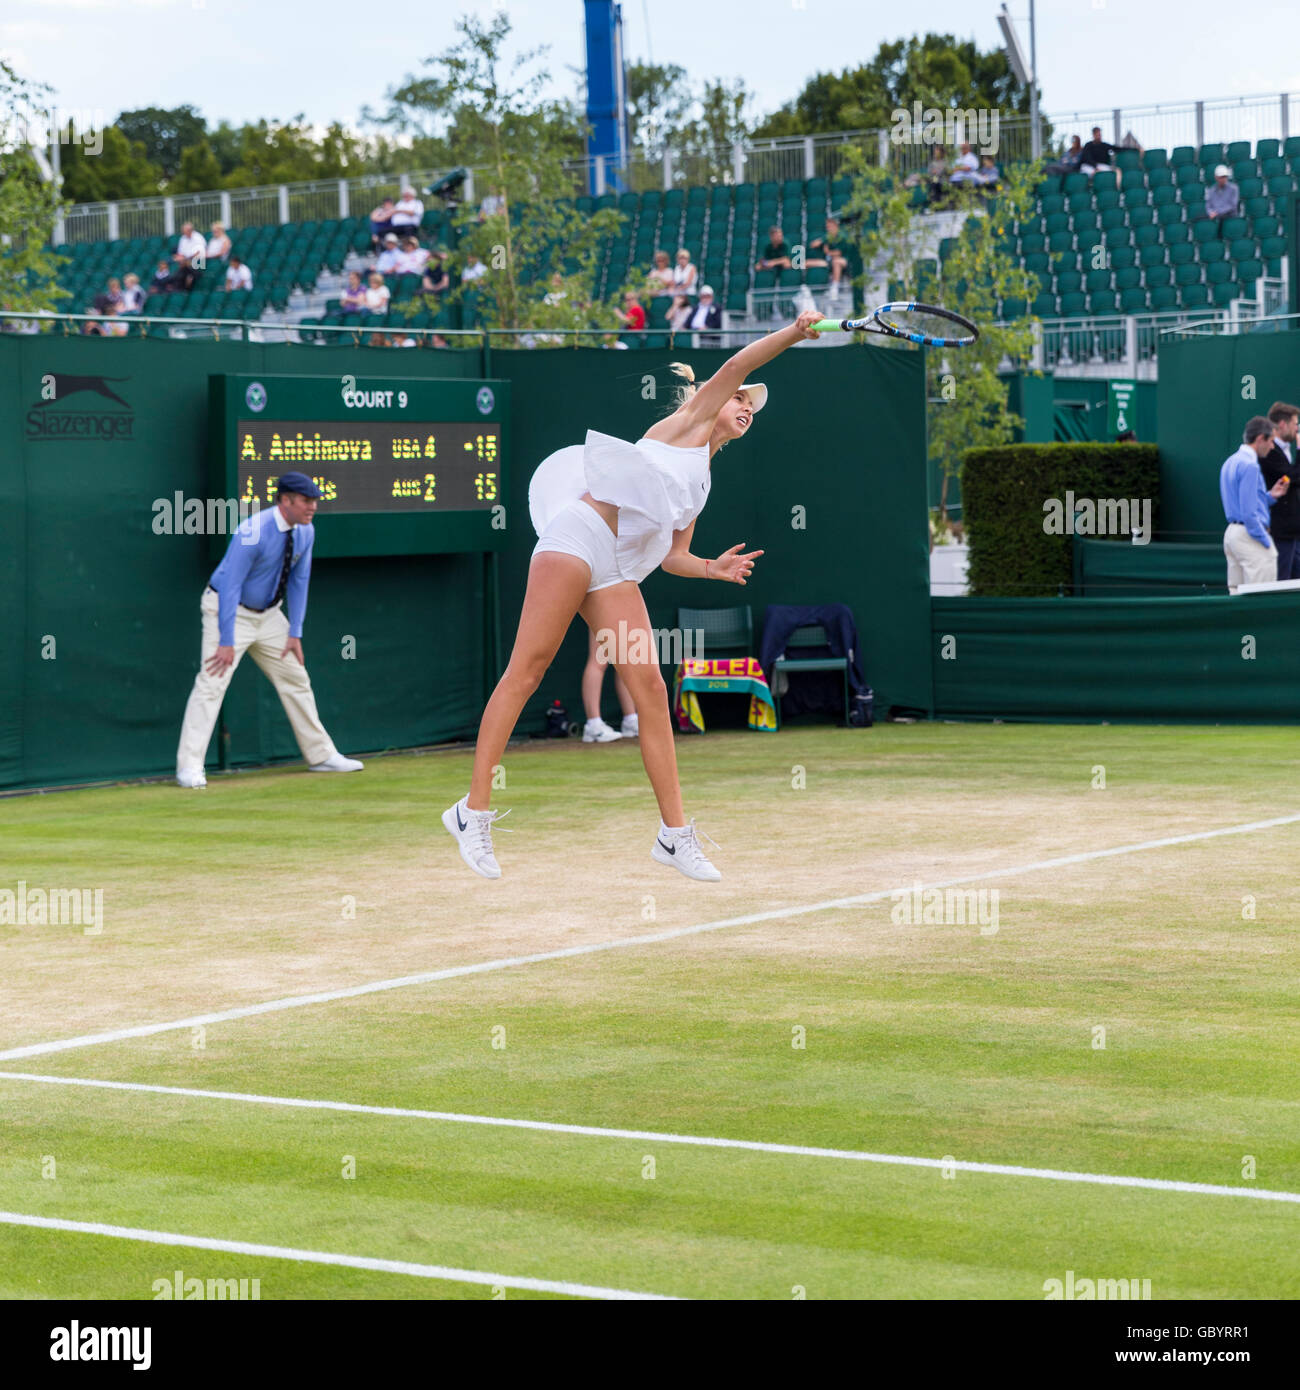 Amanda Anisimova, American tennis player, serves at the Wimbledon Championships 2016 Stock Photo